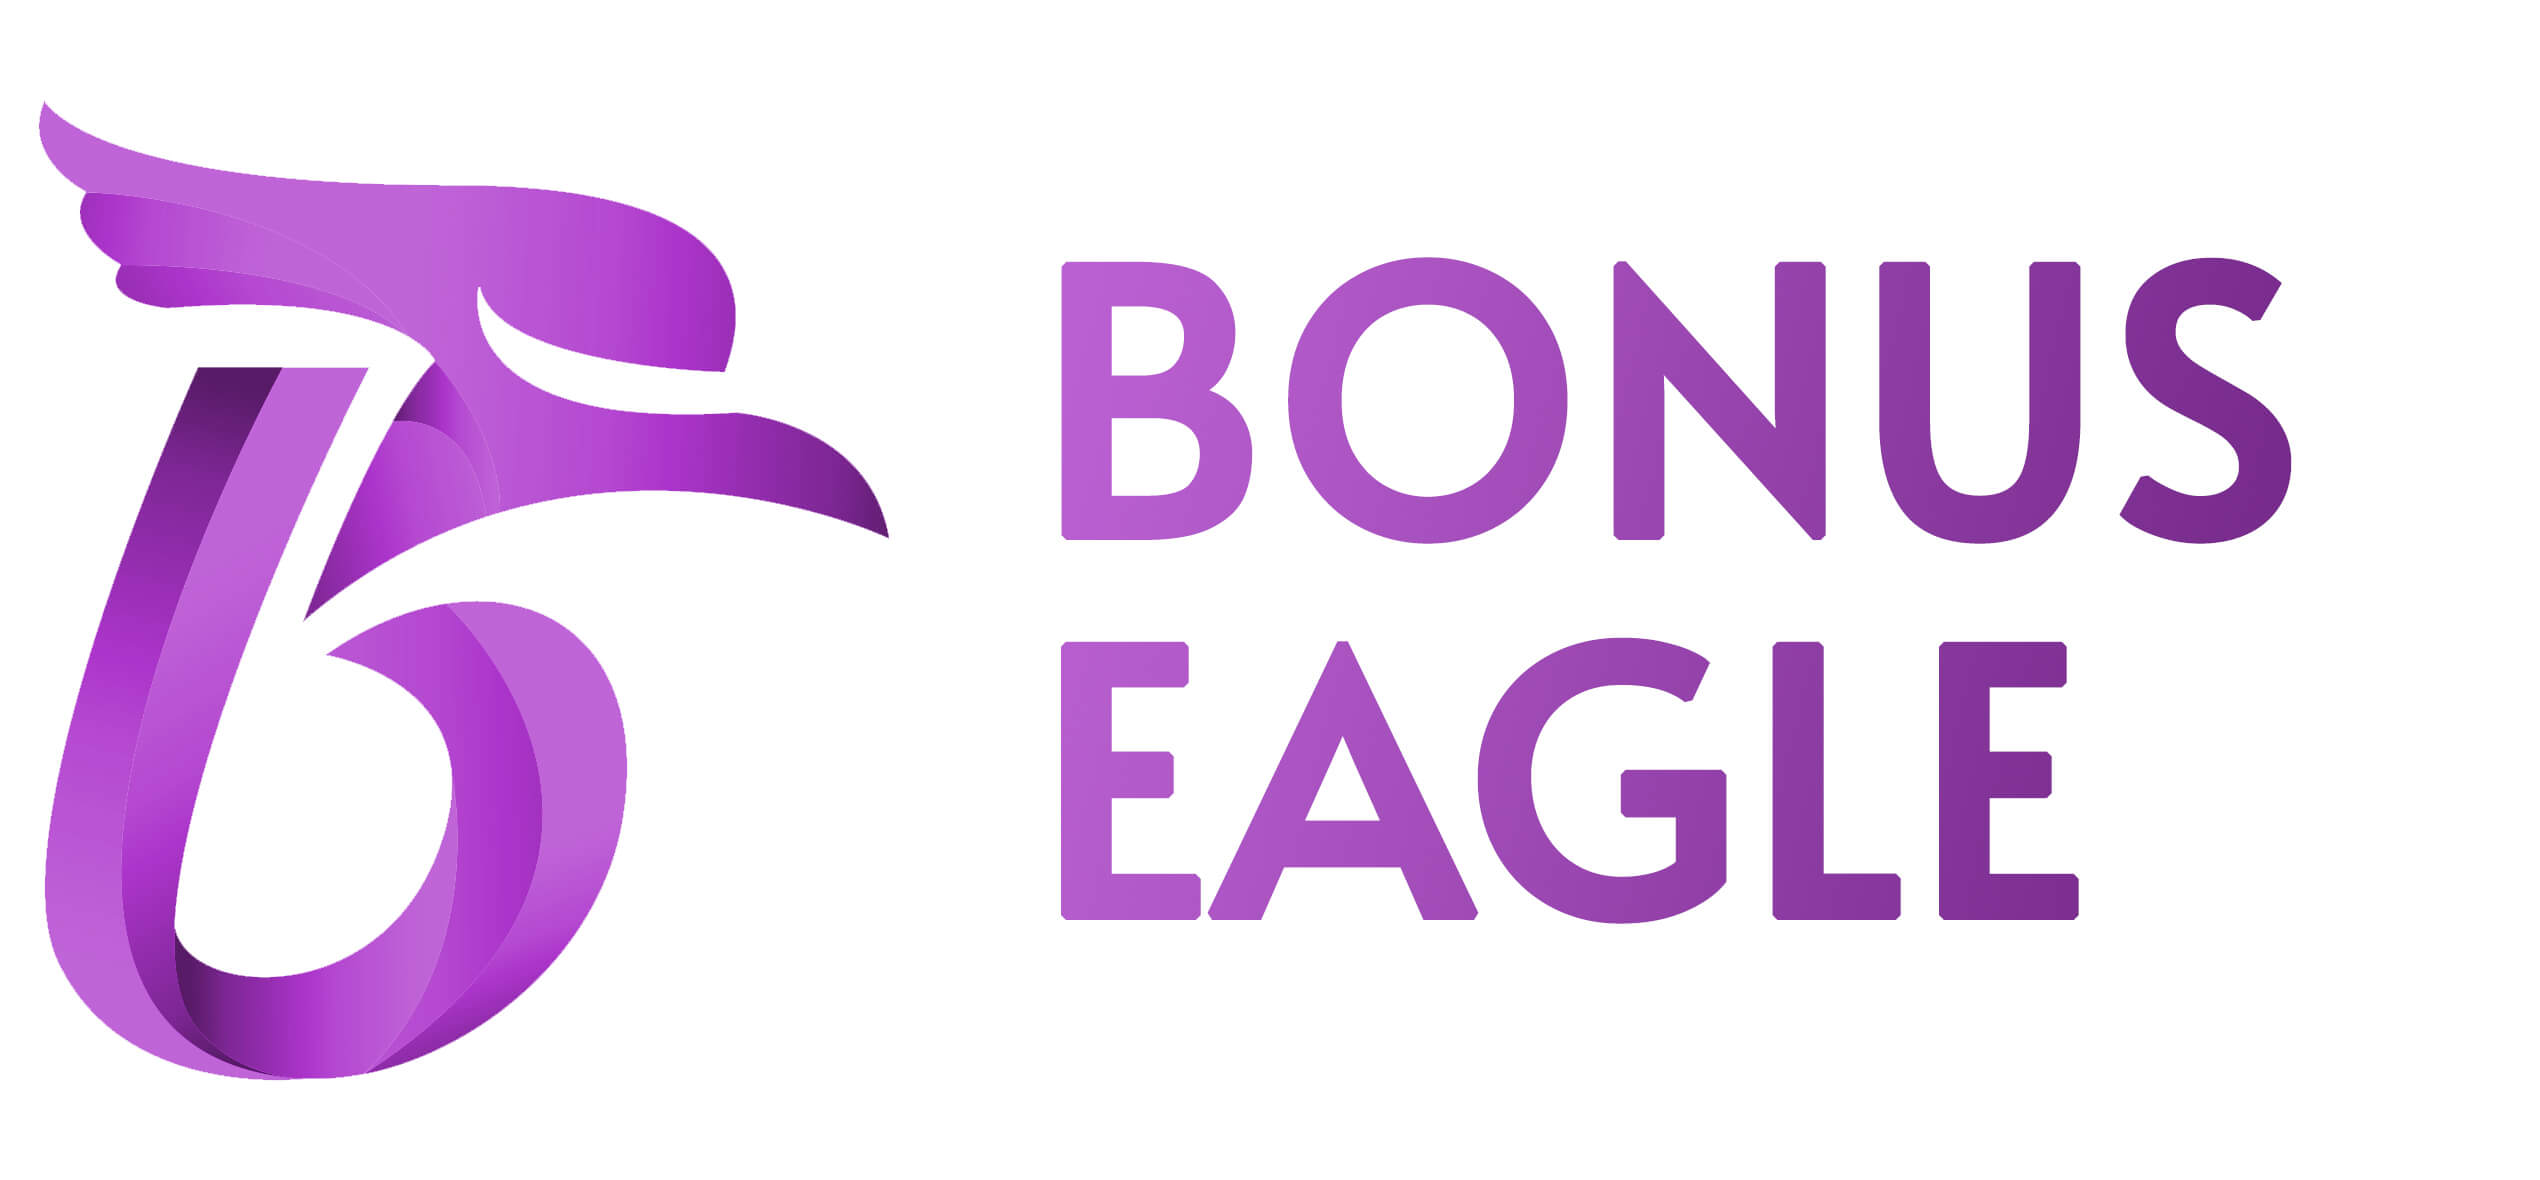 bonus eagle vergleich casino bonus ranking logo